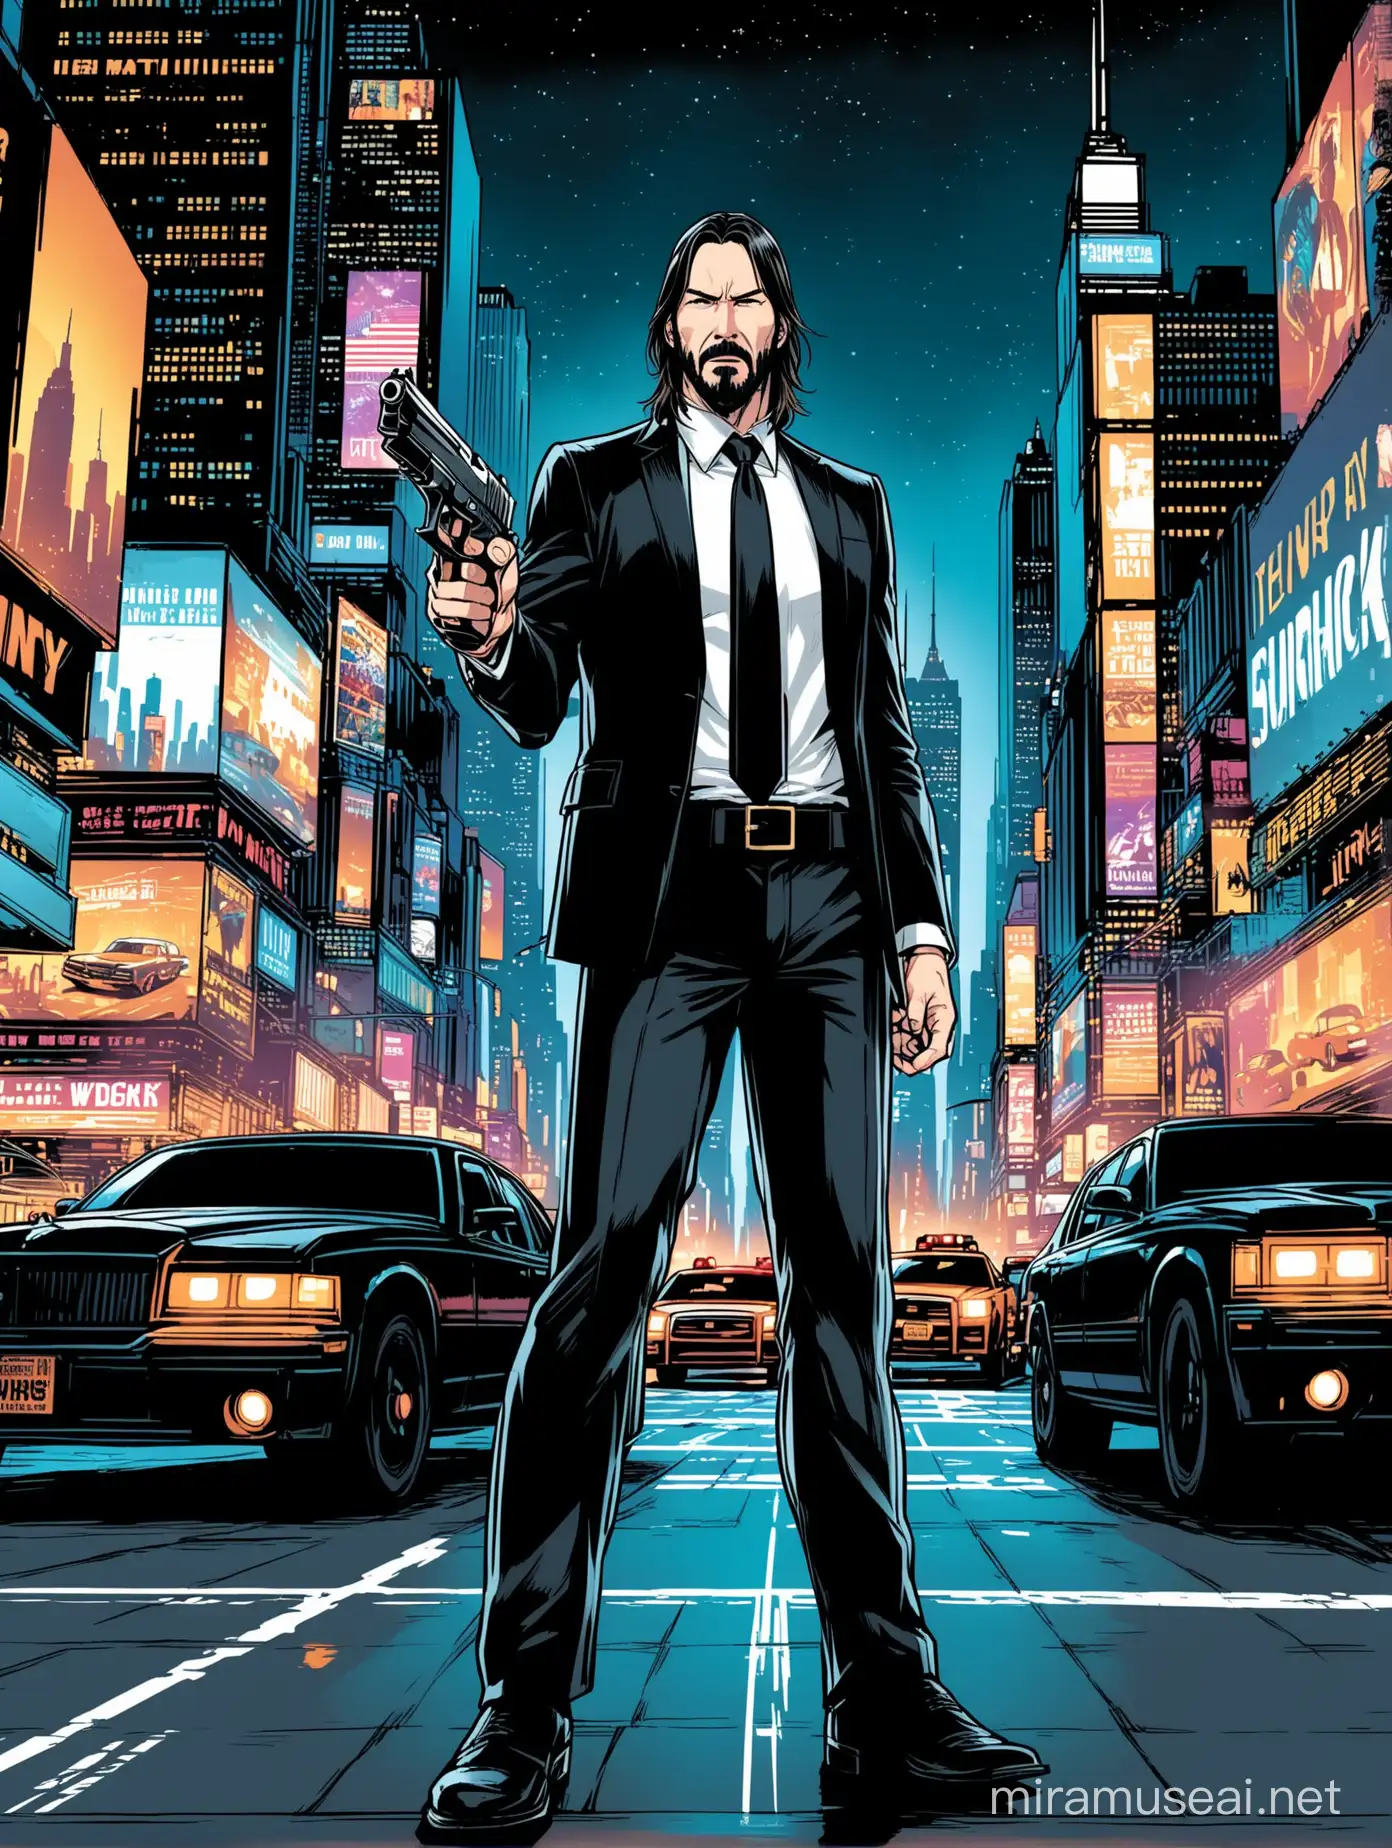 Urban Vigilante John Wick Inspired Action in Times Square